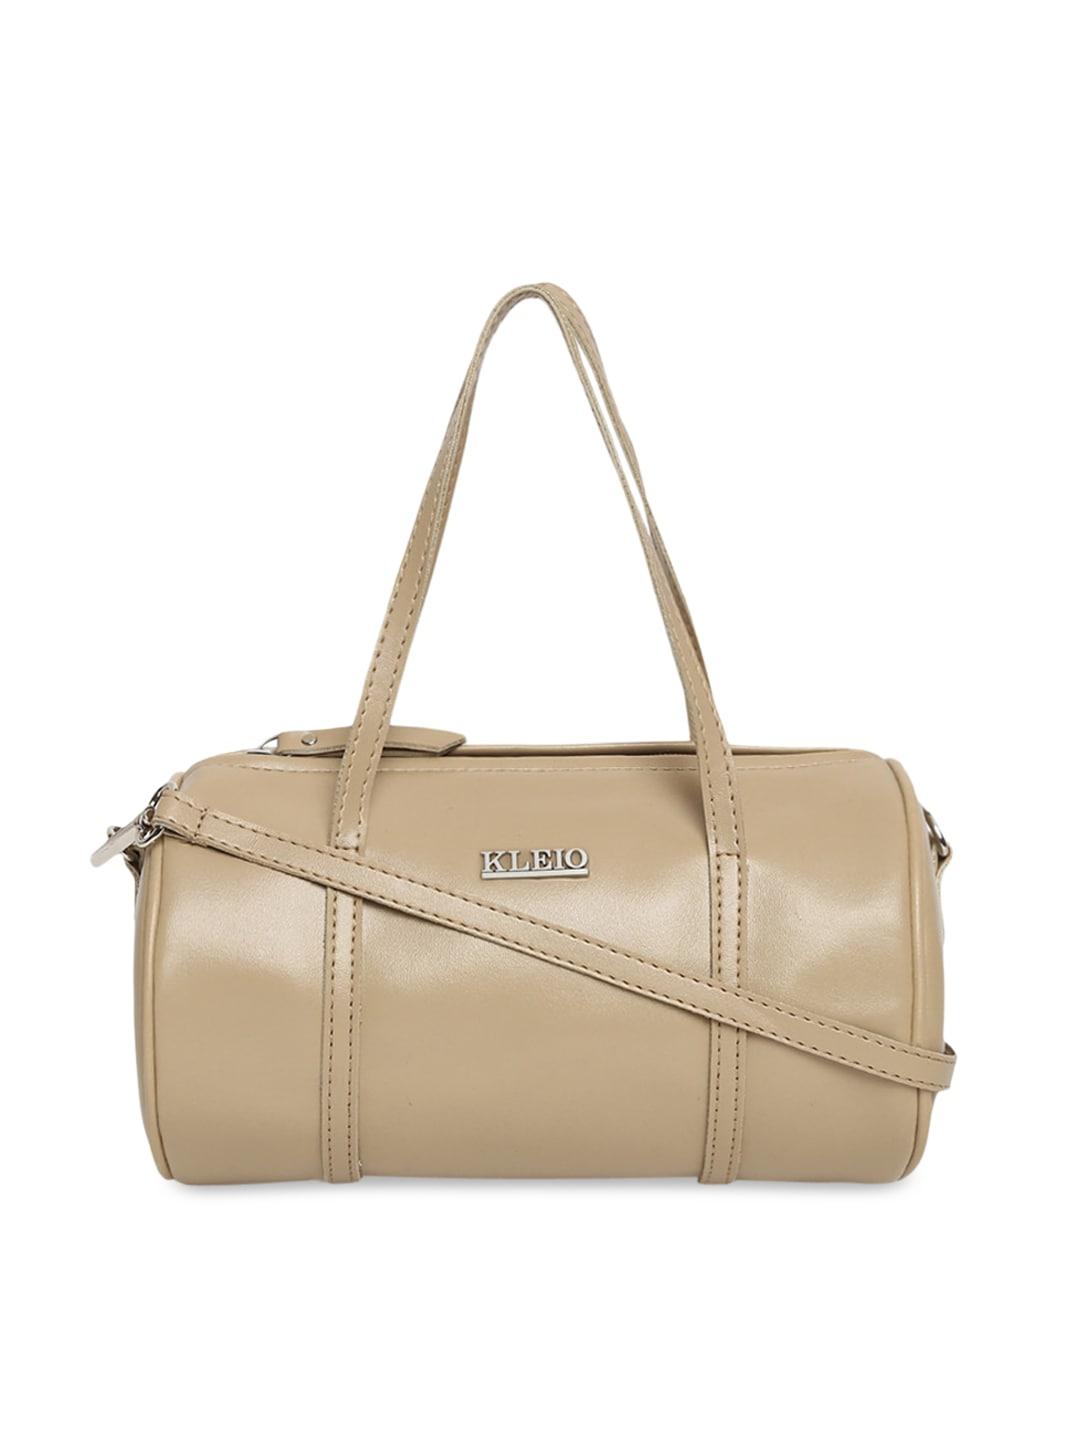 KLEIO Beige Solid Hand Bag